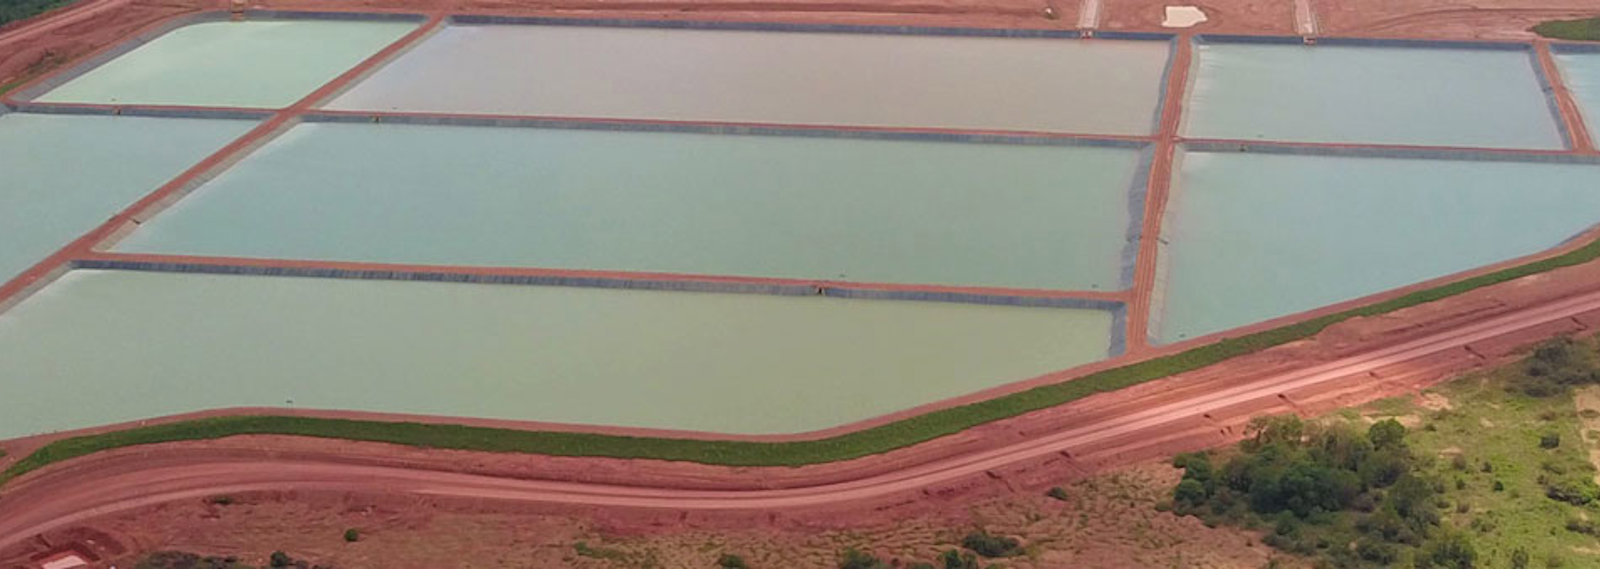 Reservoir at Paragominas, Brazil